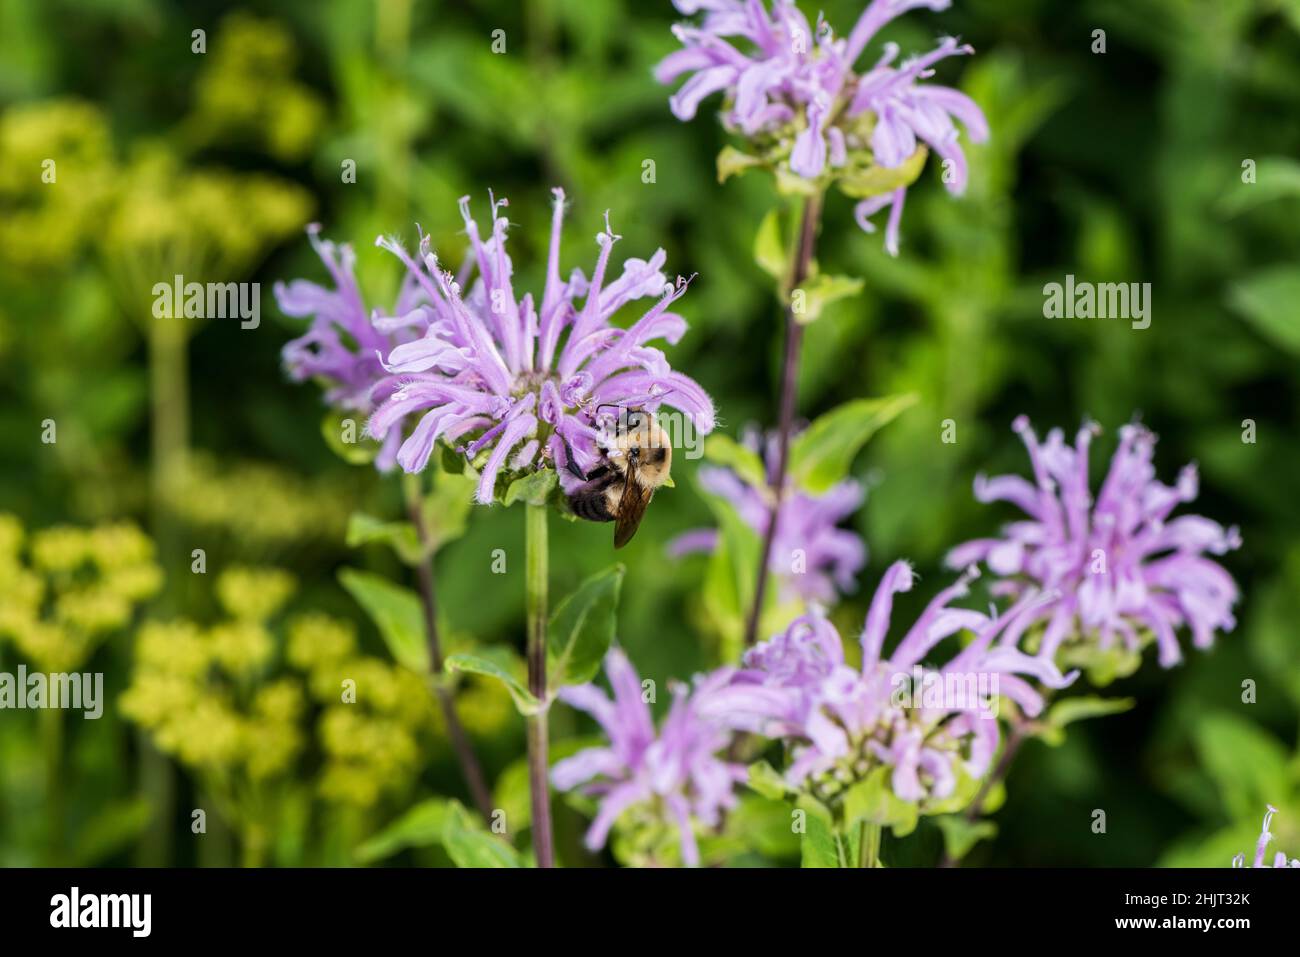 Hummel auf Bienenbalsam (Lamiaceae) Stockfoto